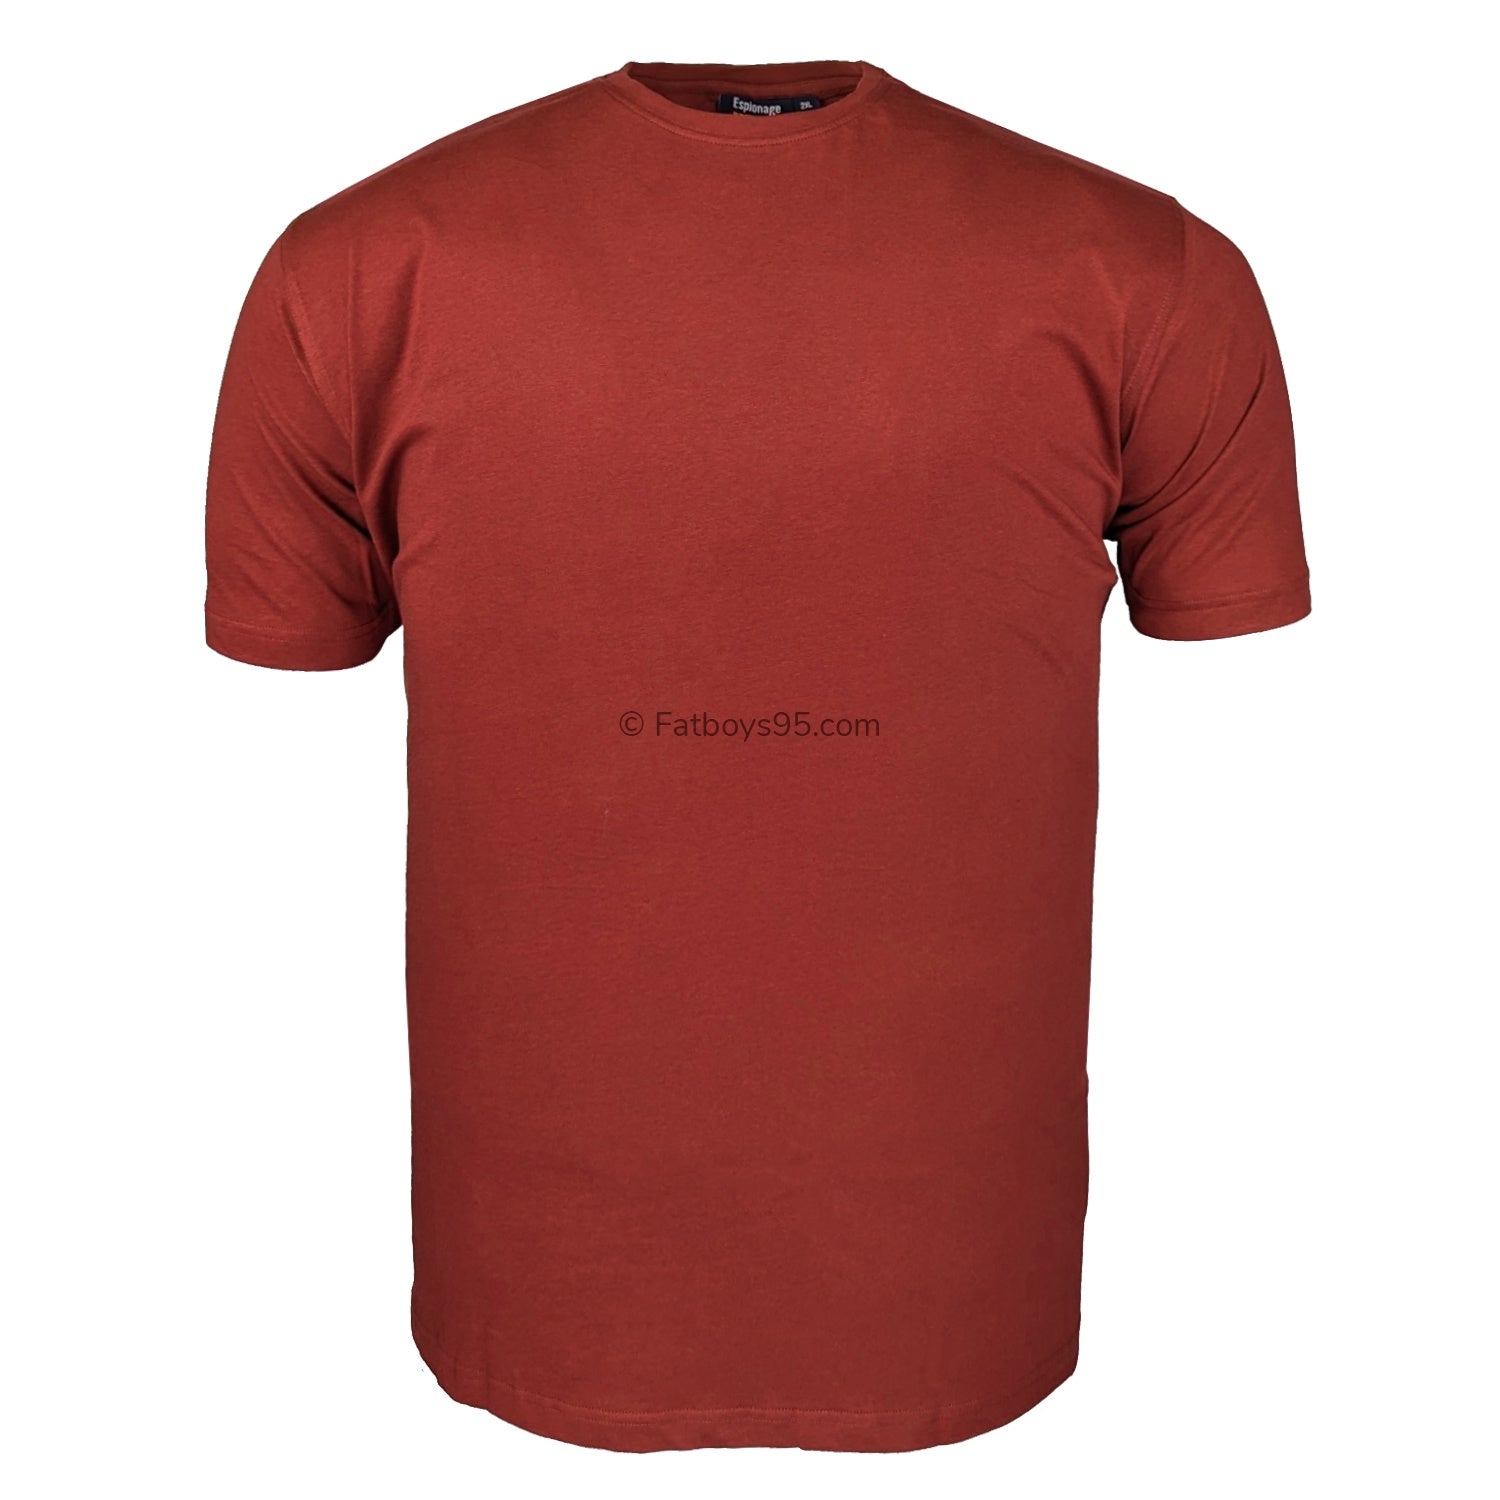 Espionage Plain Round Neck T-Shirt - T015 - Burnt Orange